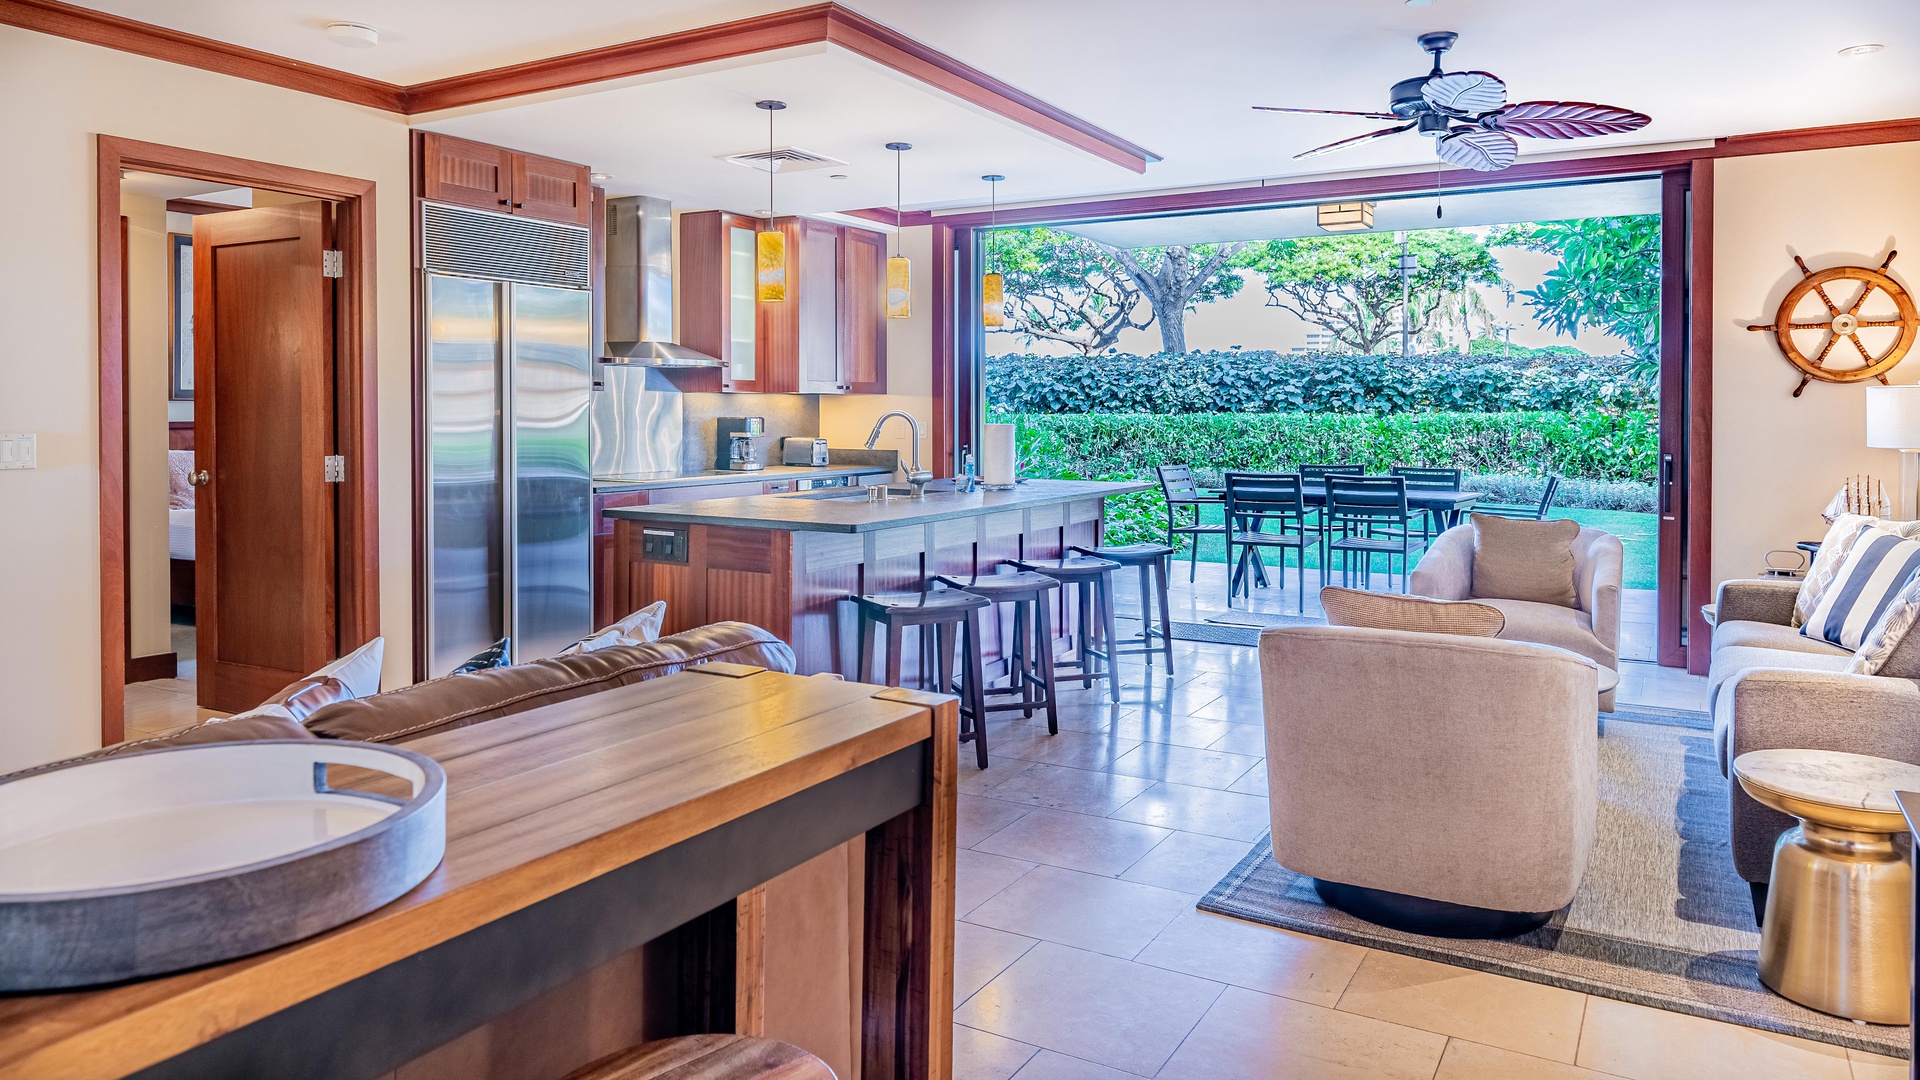 Kapolei Vacation Rentals, Ko Olina Beach Villas B102 - An open floor plan with kitchen, dining and living area.